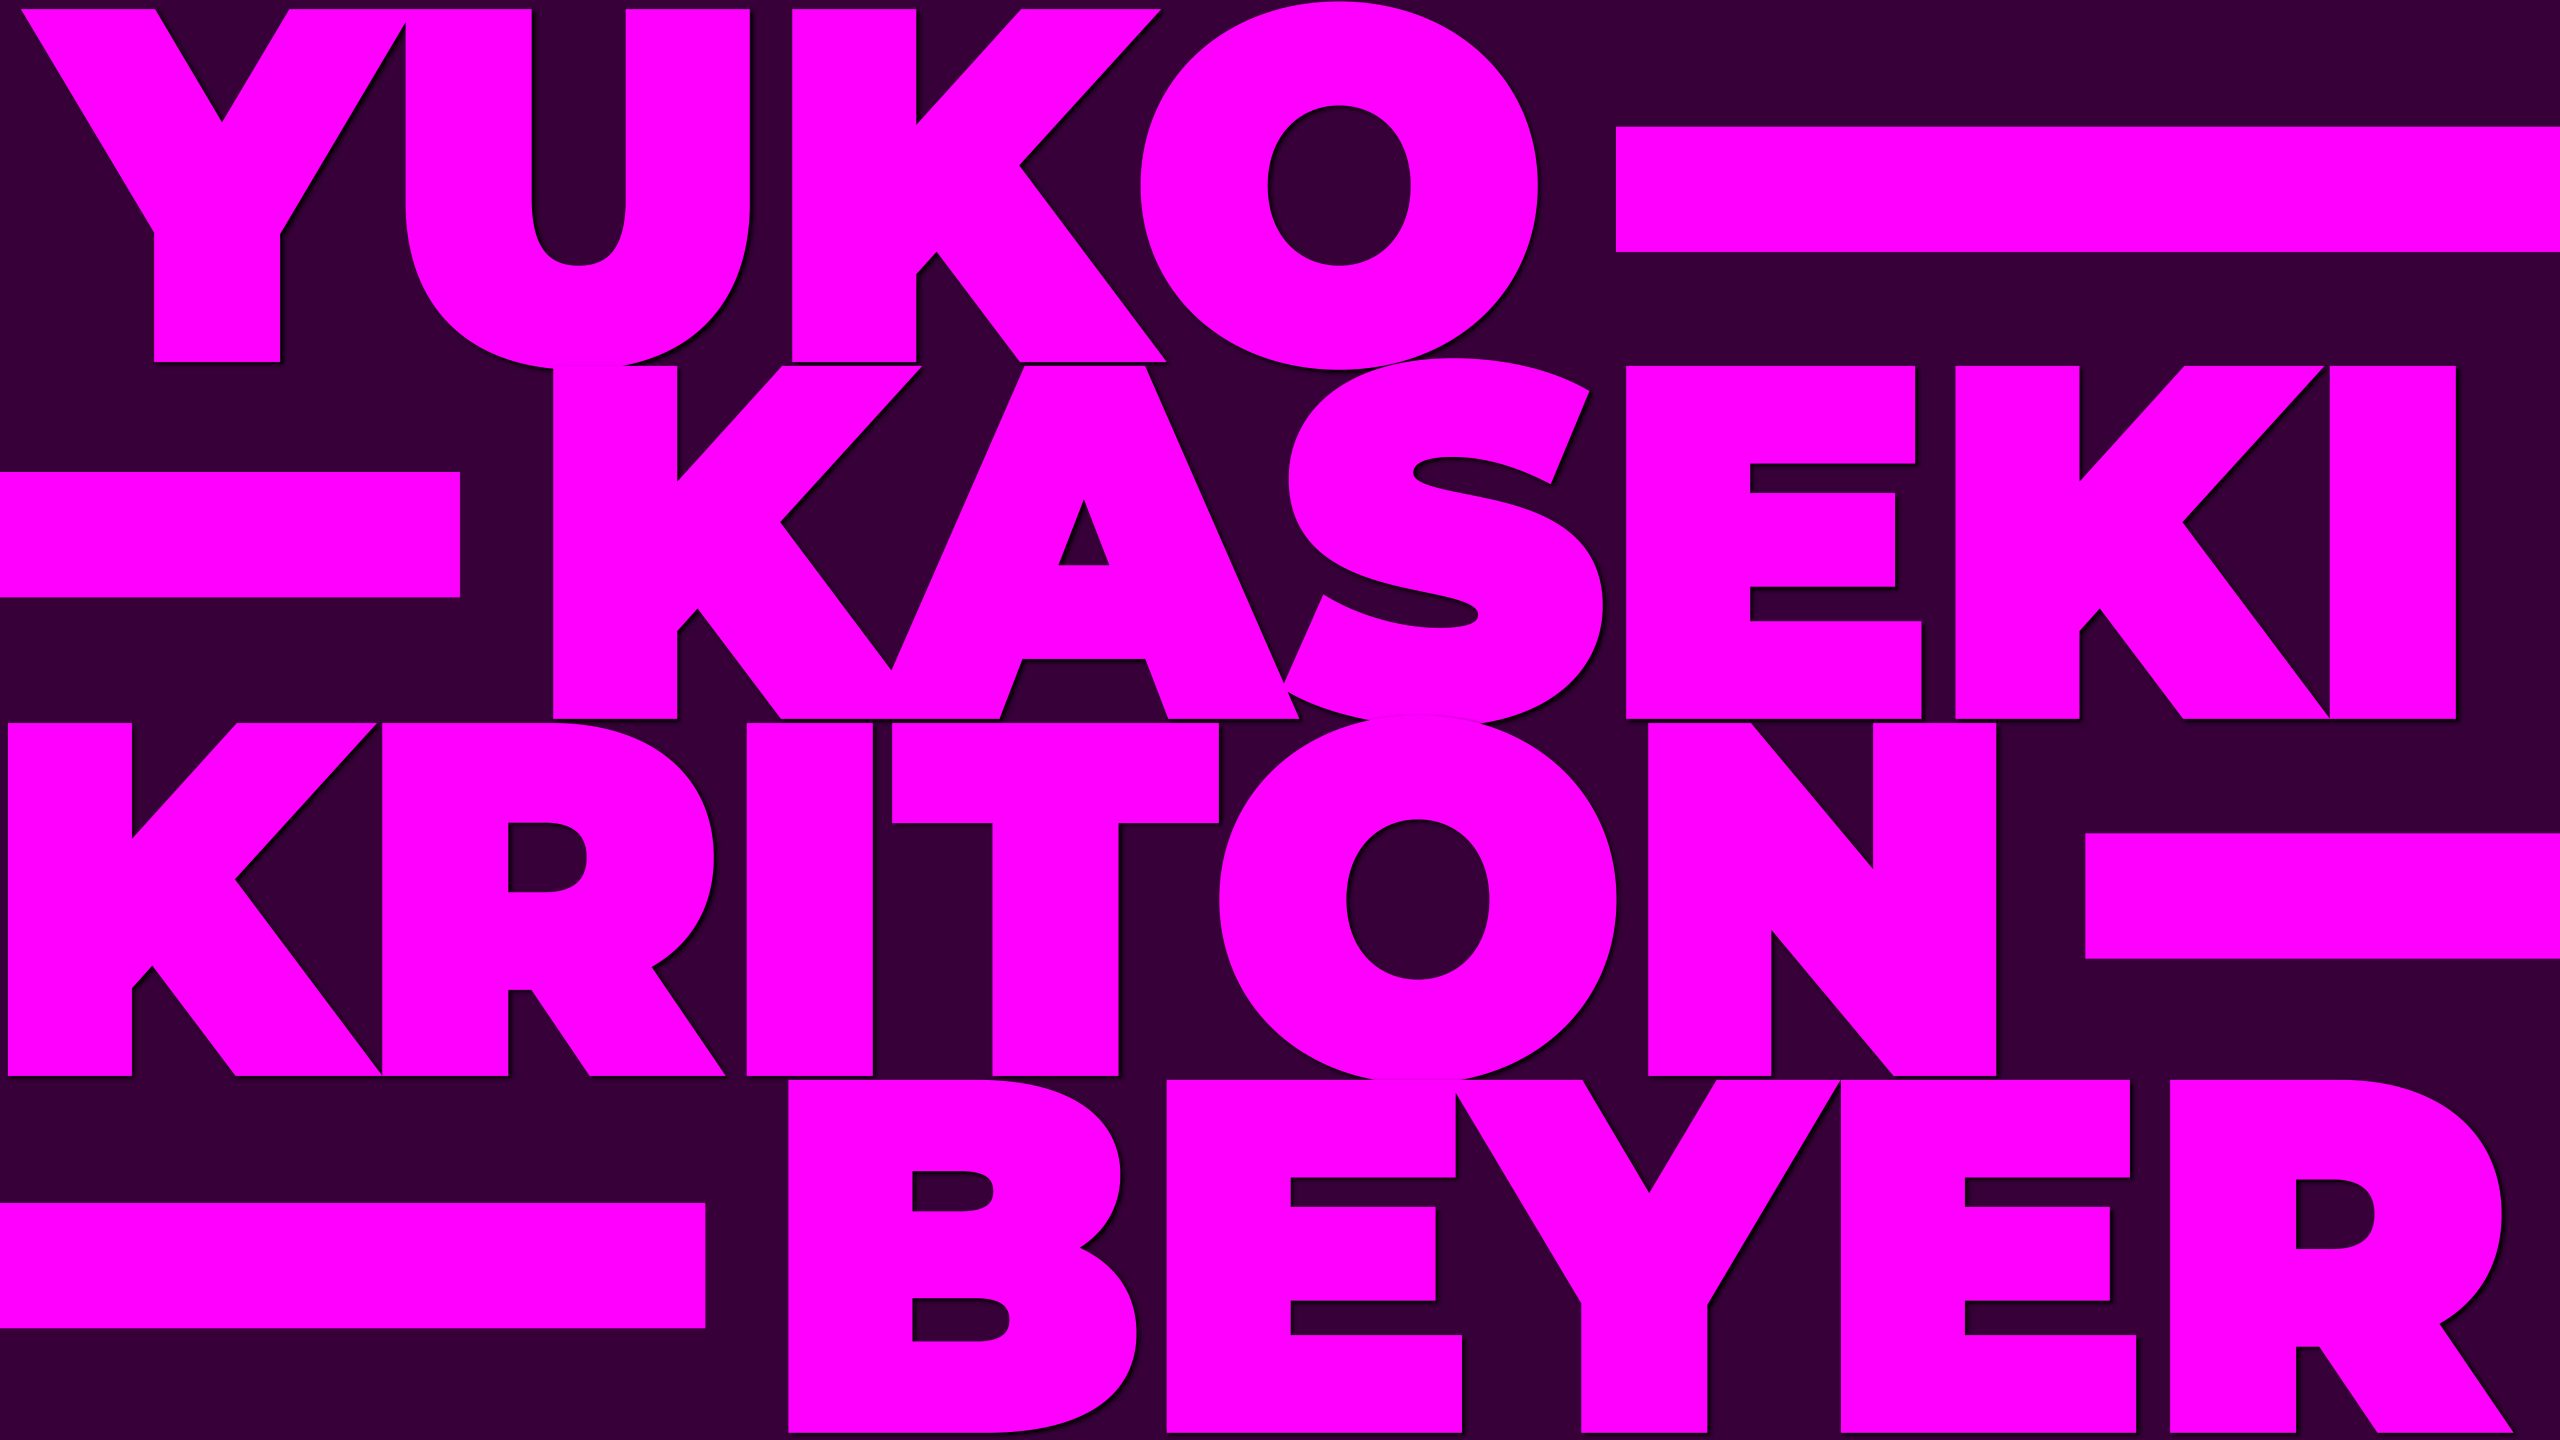 Kriton Beyer - daxophone, string installation Yuko Kaseki - butoh dance